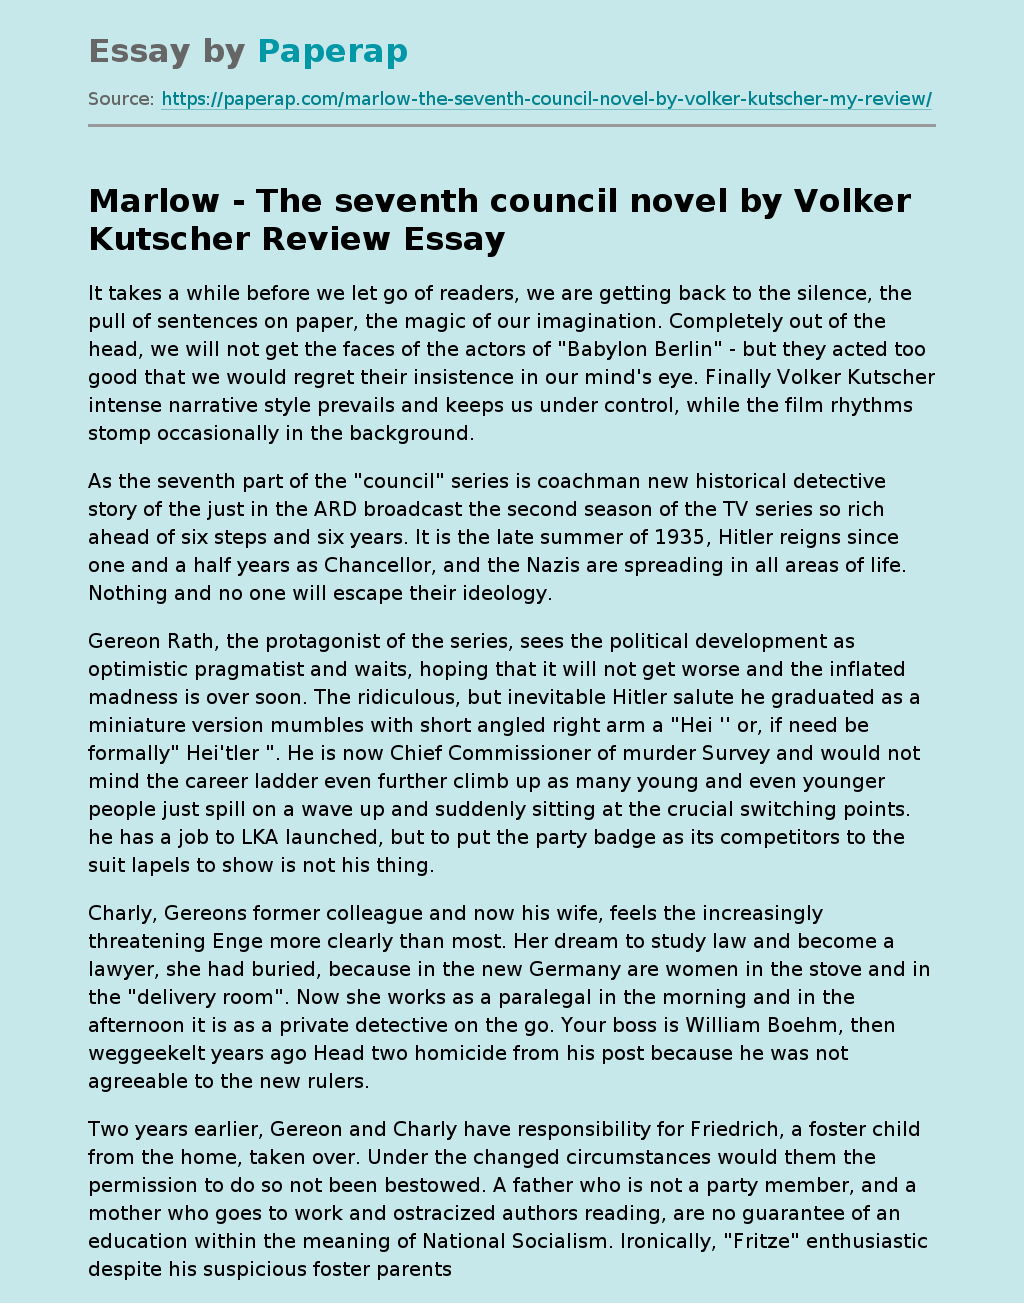 Marlow - The seventh council novel by Volker Kutscher Review